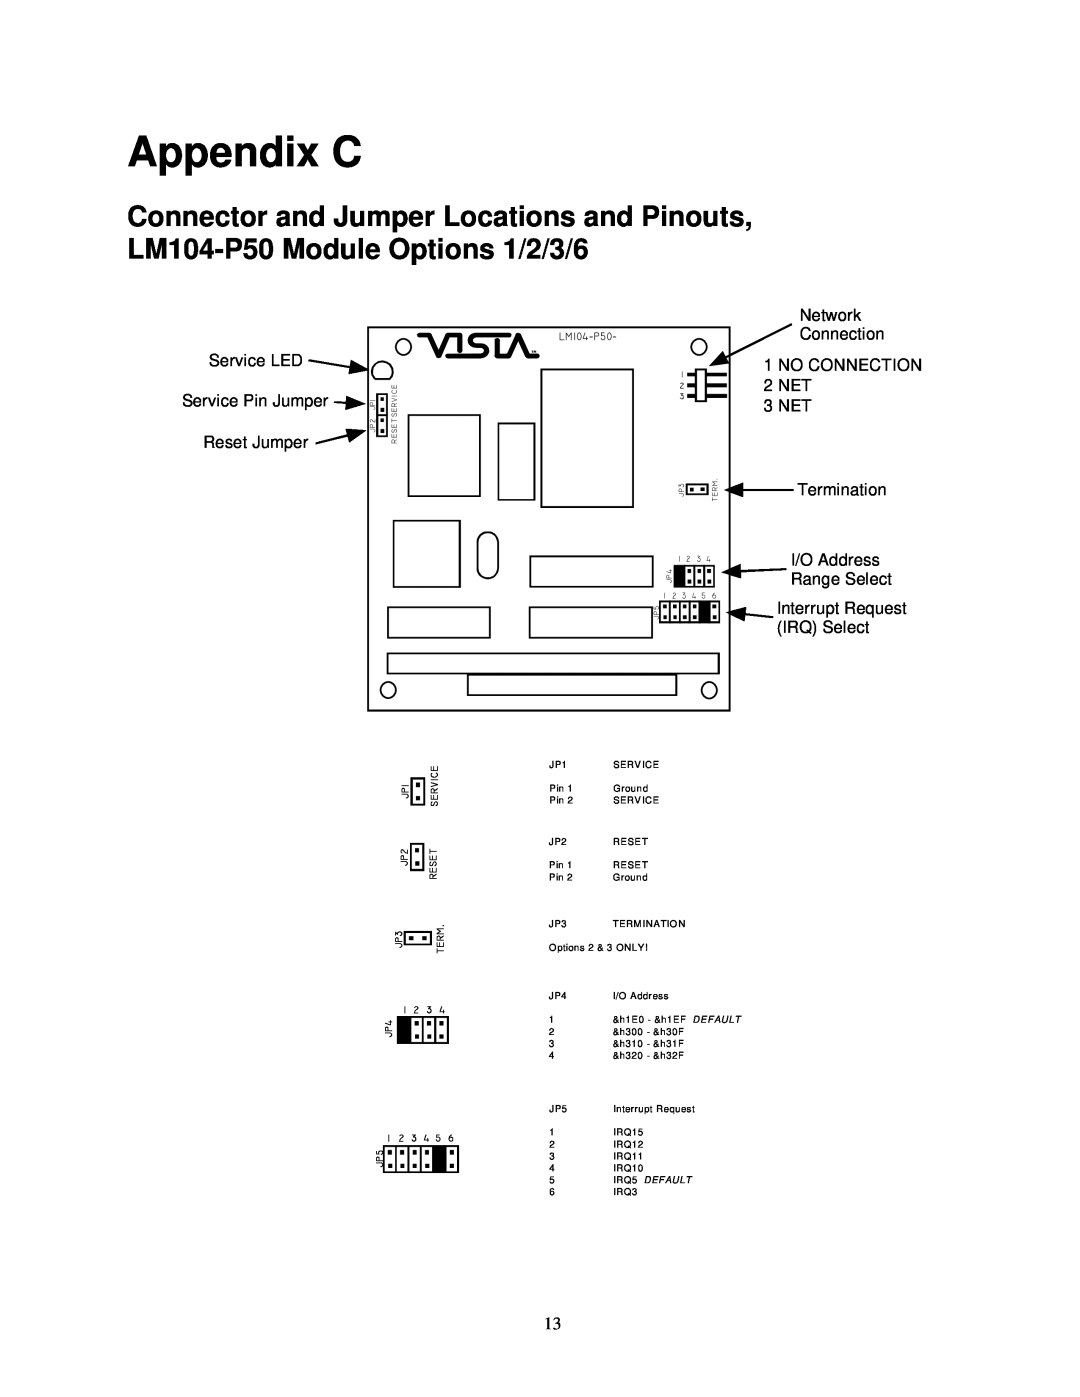 Vista LM104-P50 Appendix C, Service LED, Service Pin Jumper, Reset Jumper, Network, NO CONNECTION 2 NET 3 NET, Termination 